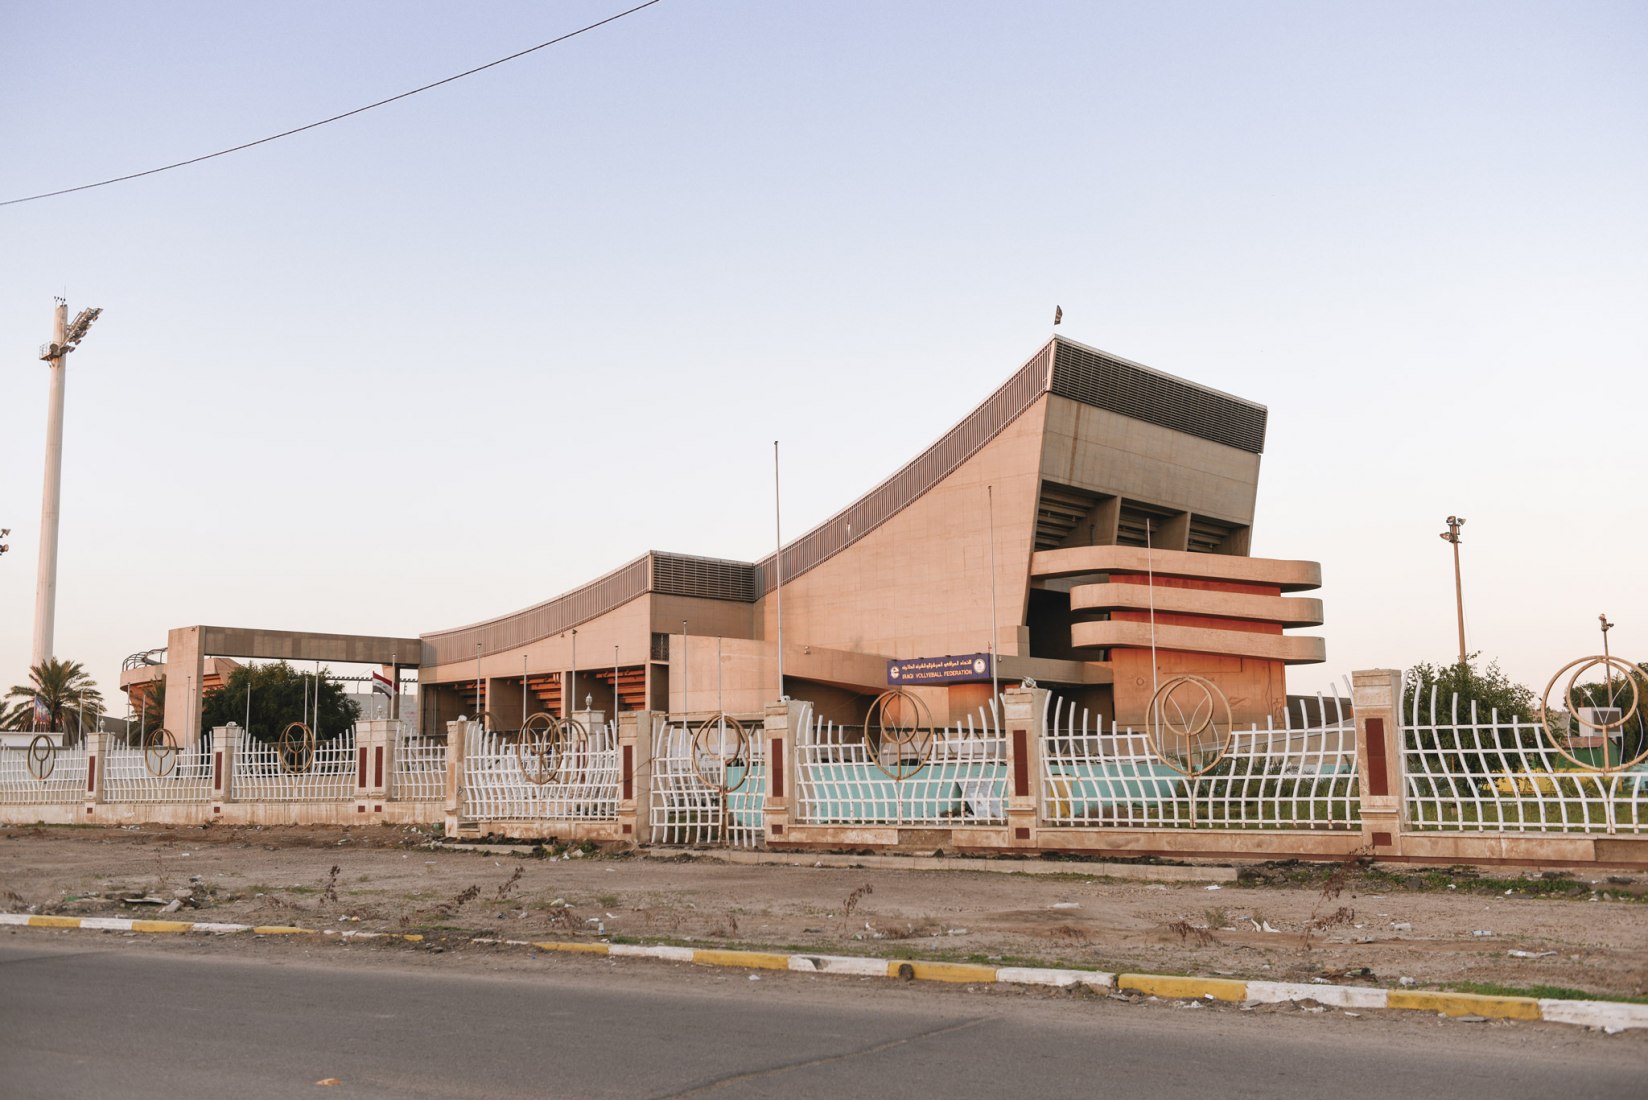 Gymnasium in Bagdad, Irak, designed by Le Corbusier, realized posthumously, 1978– 1980. Photograph © Ayman Al Amiri